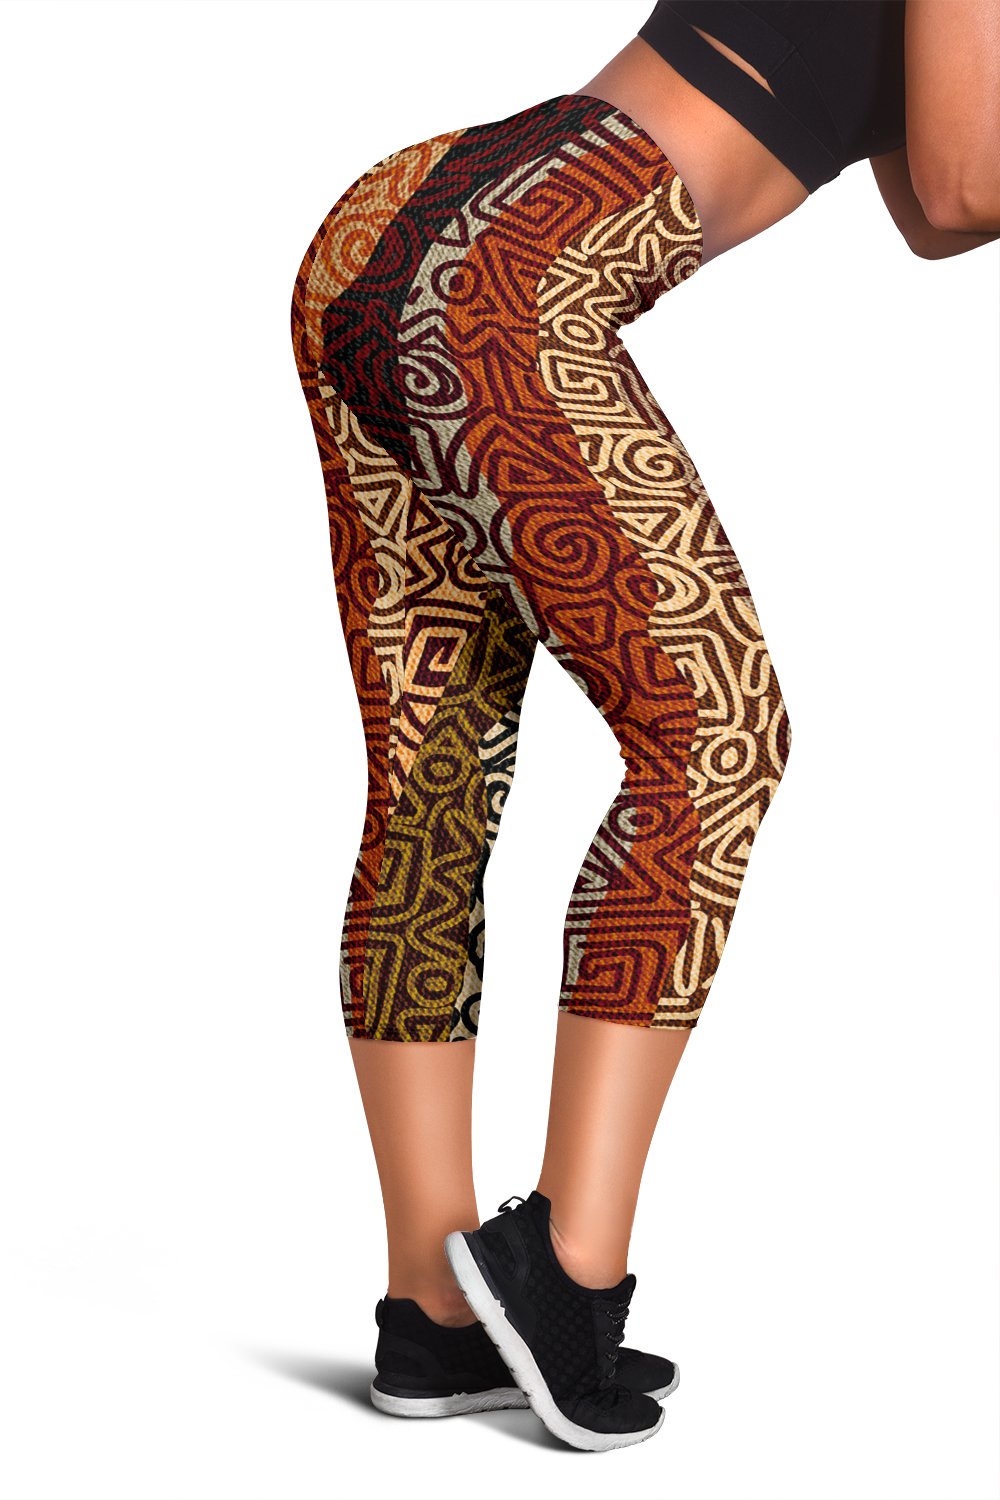 African Pattern Print Women Capris